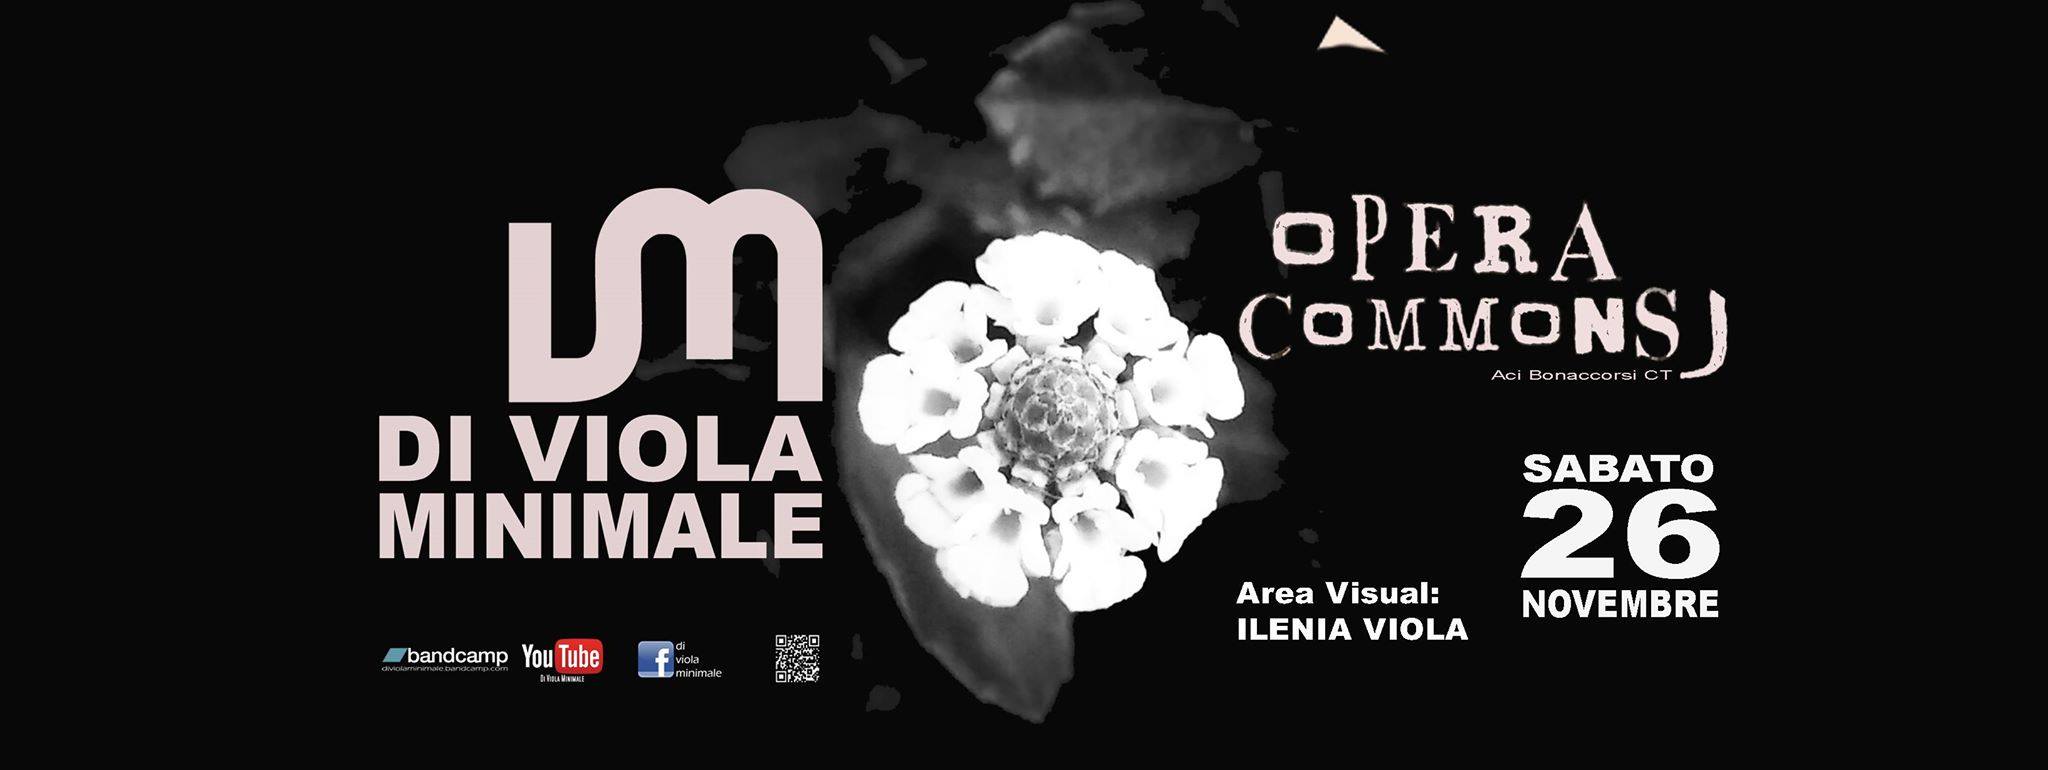 Opera Commons – Di Viola Minimale / Area visual: Ilenia Viola 26-11-2016